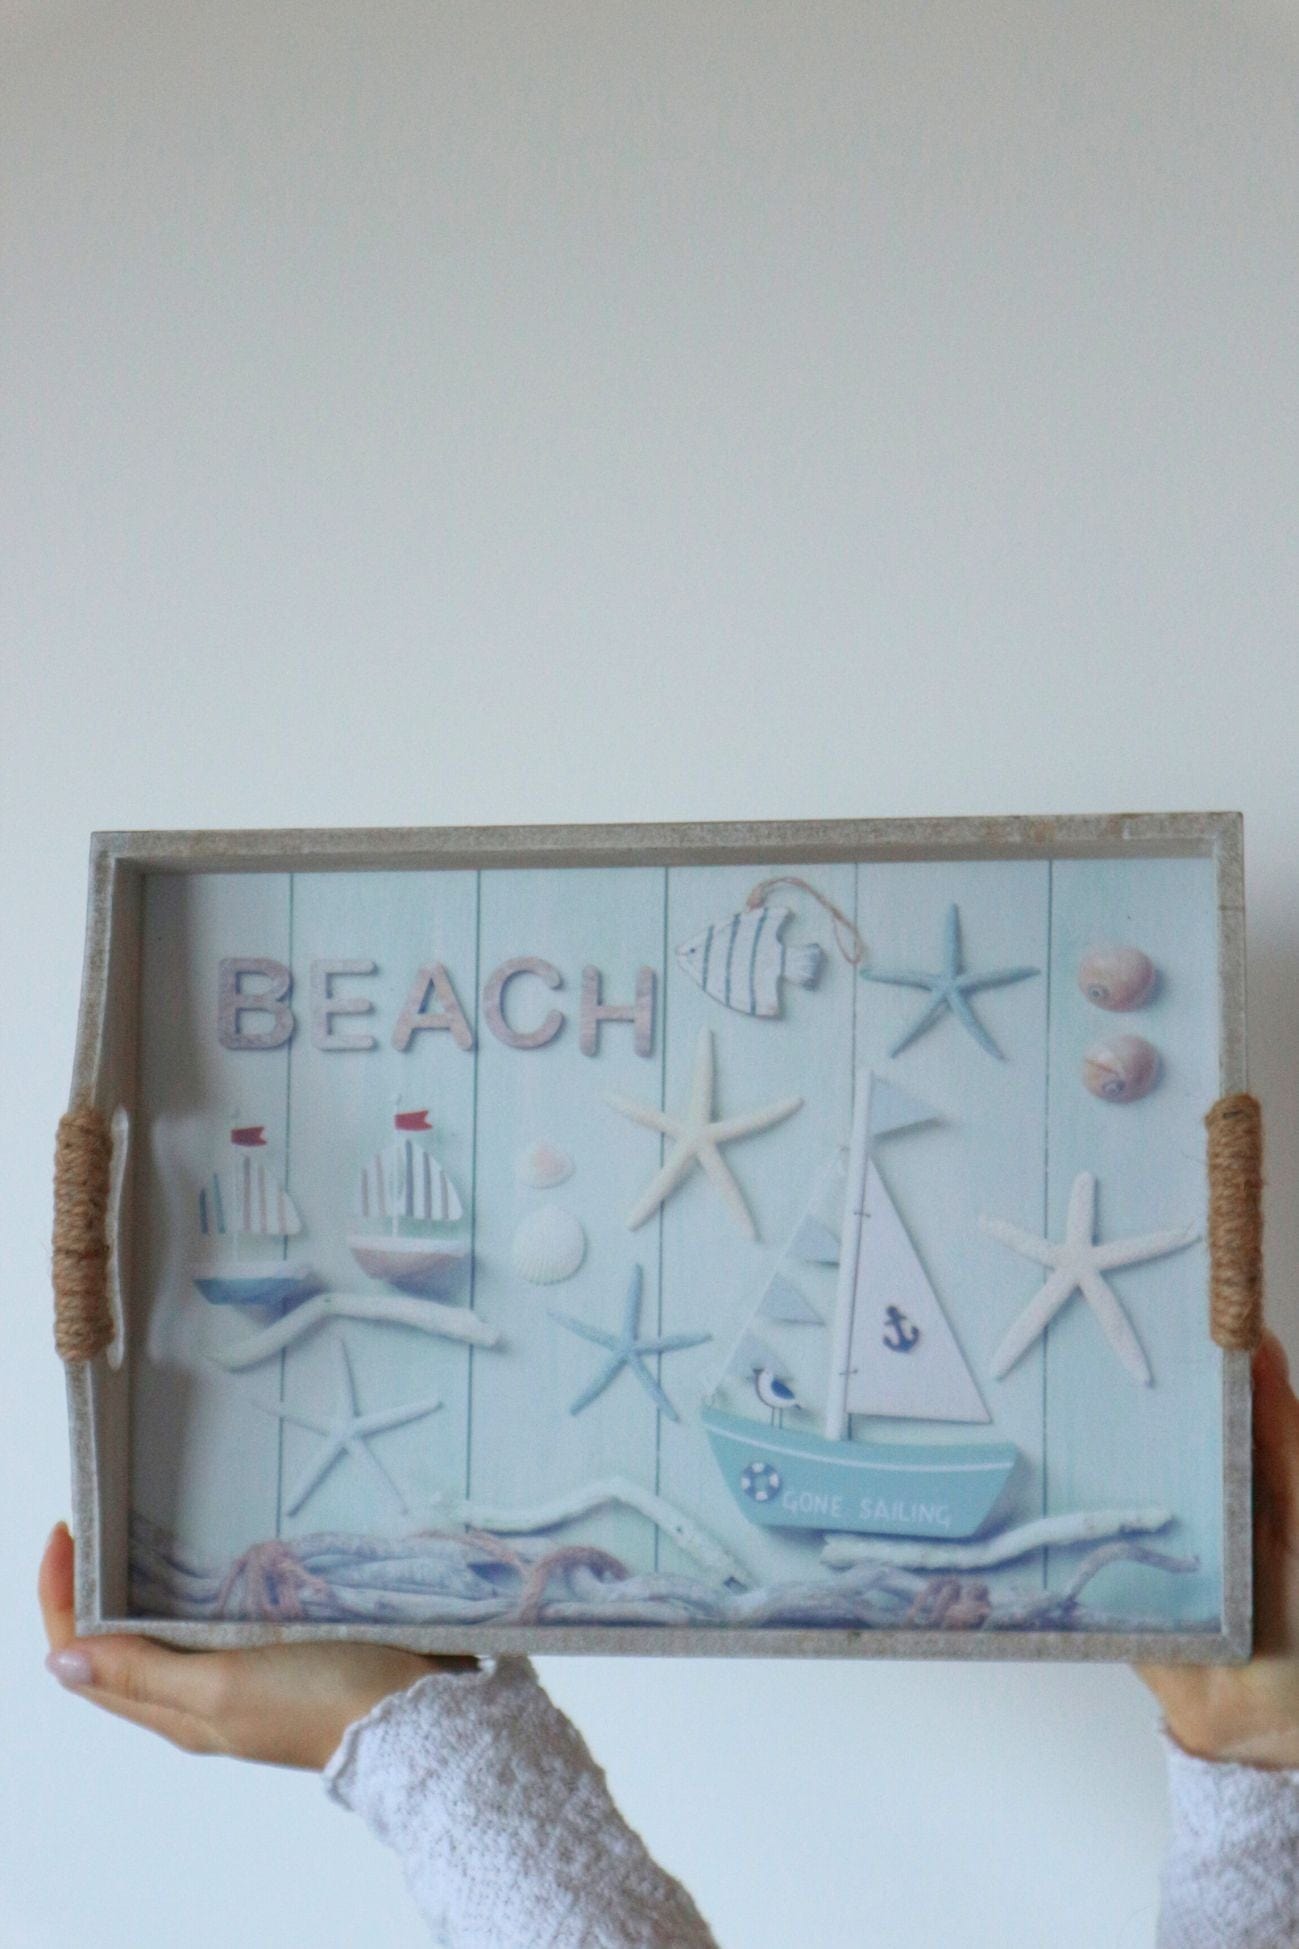 Item International Seaside Beach Seaside Beach - Vassoio piccolo in legno con manici e immagine marina | Item International